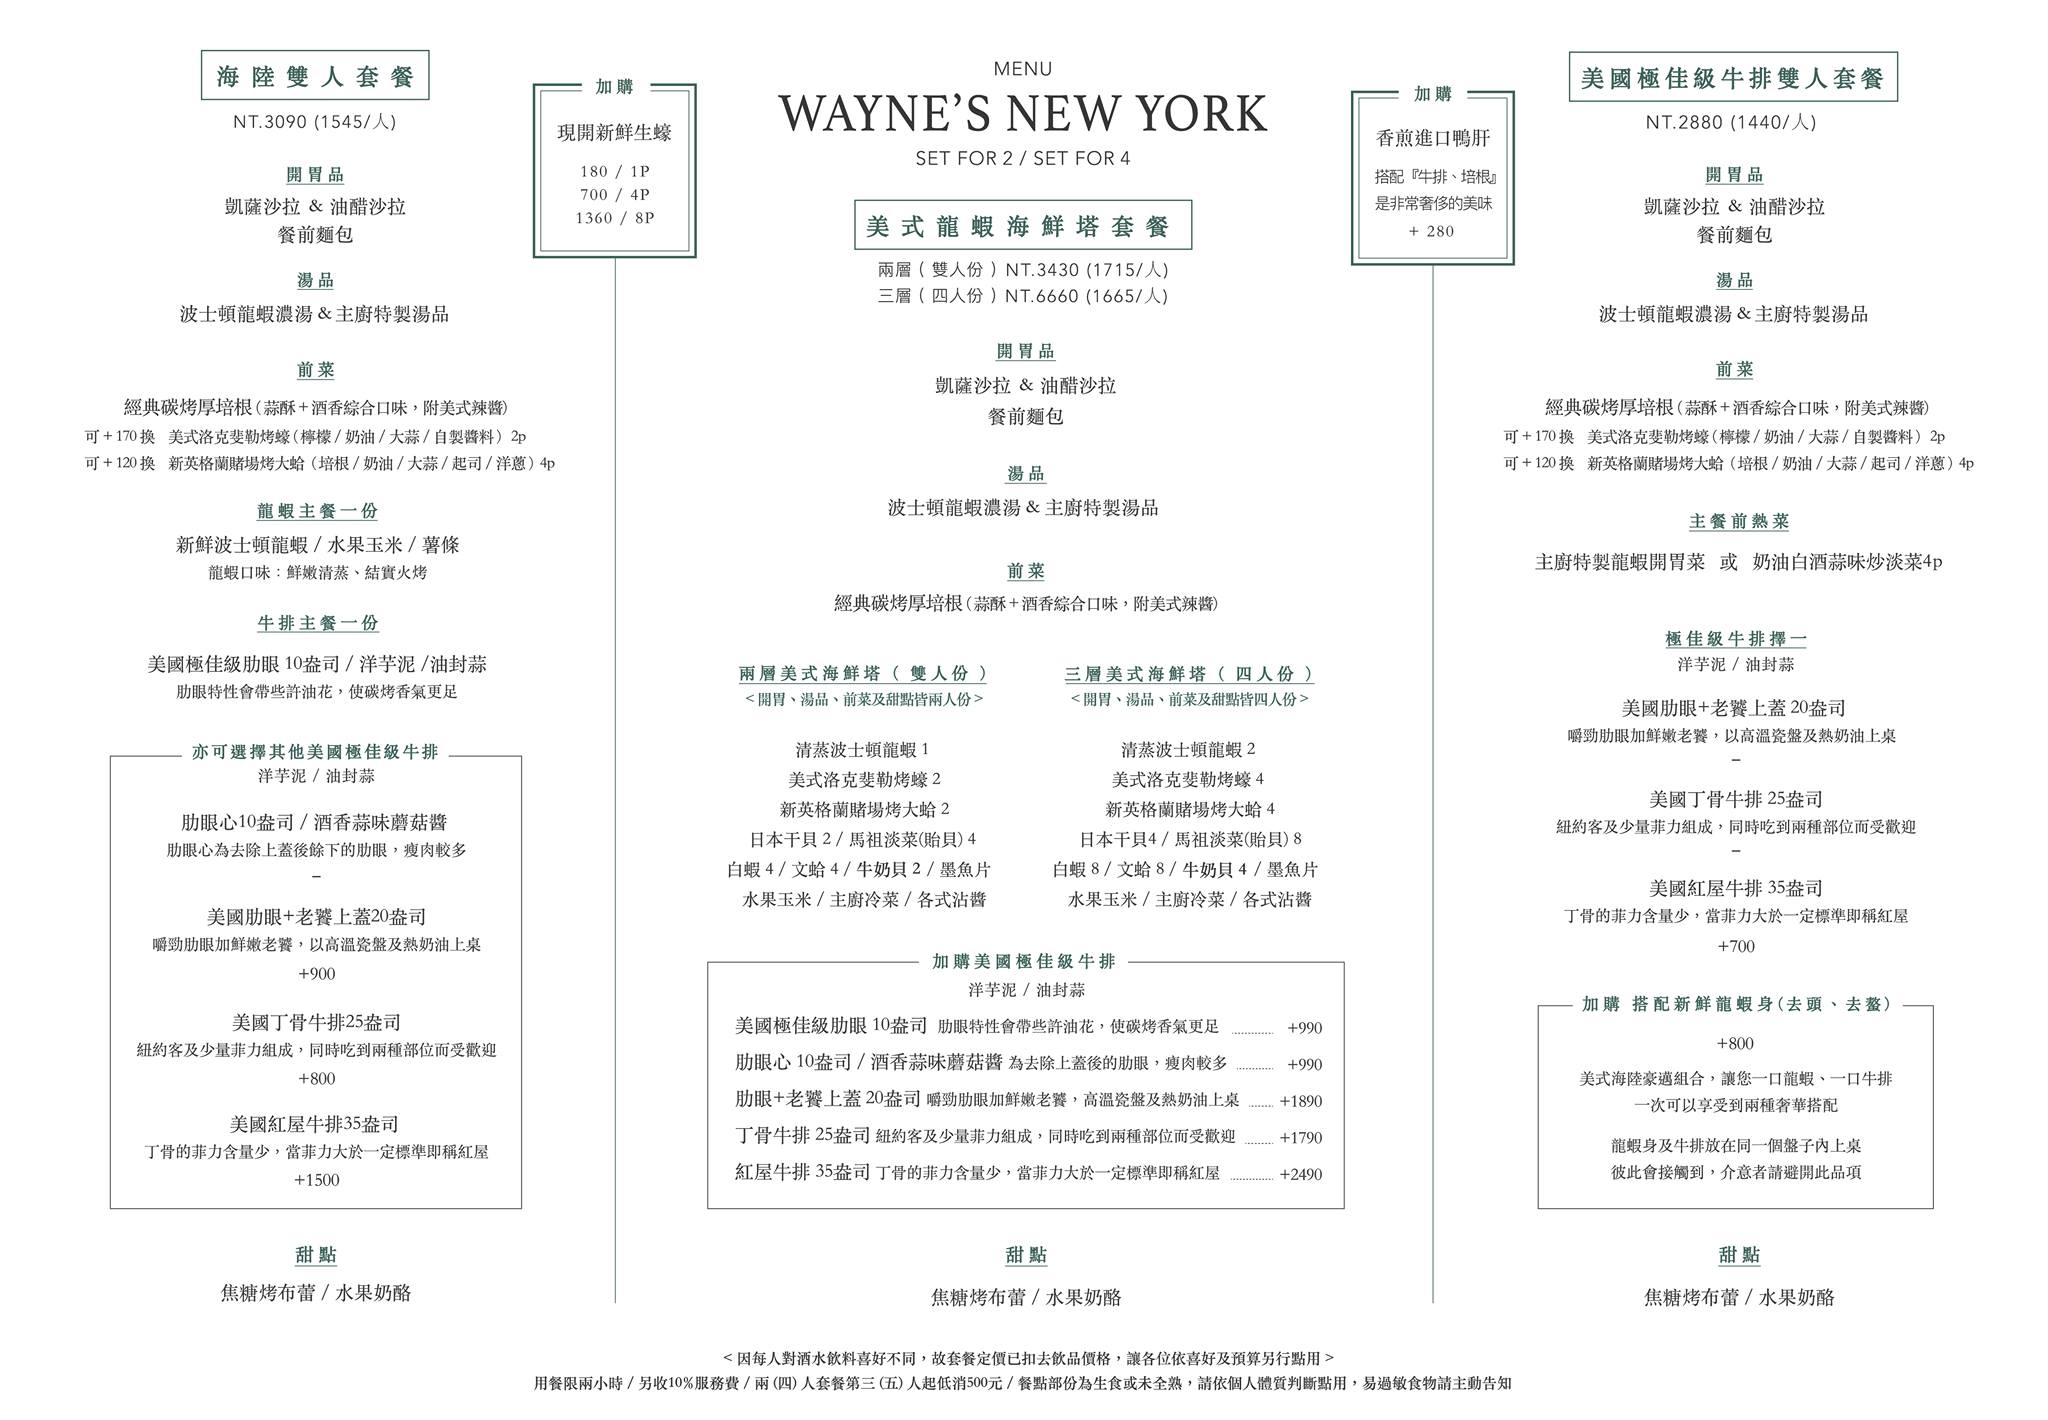 Wayne's New York 菜單